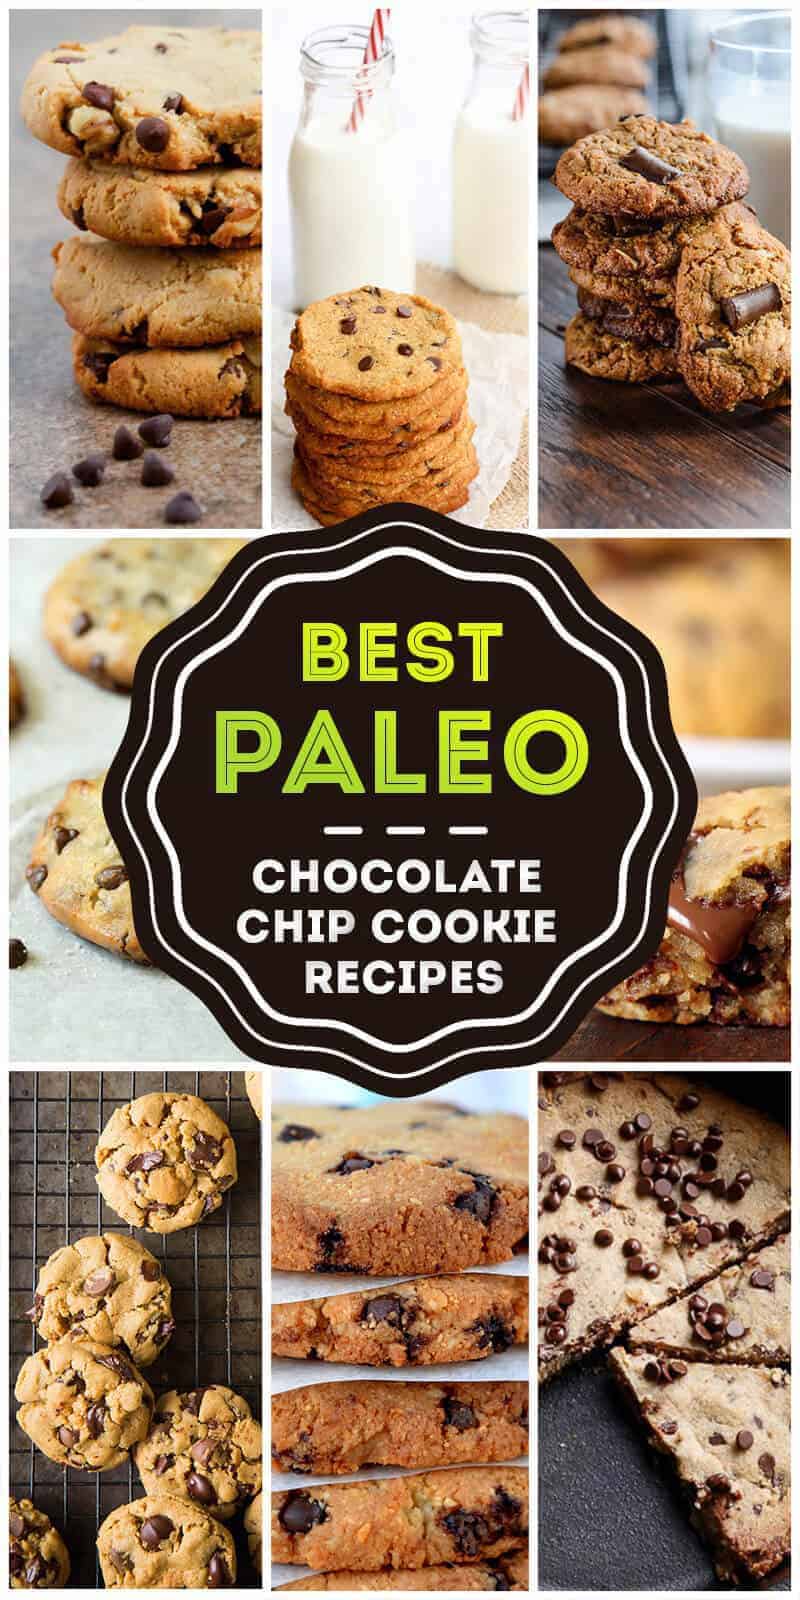 Paleo Chocolate Chip Cookie recipes